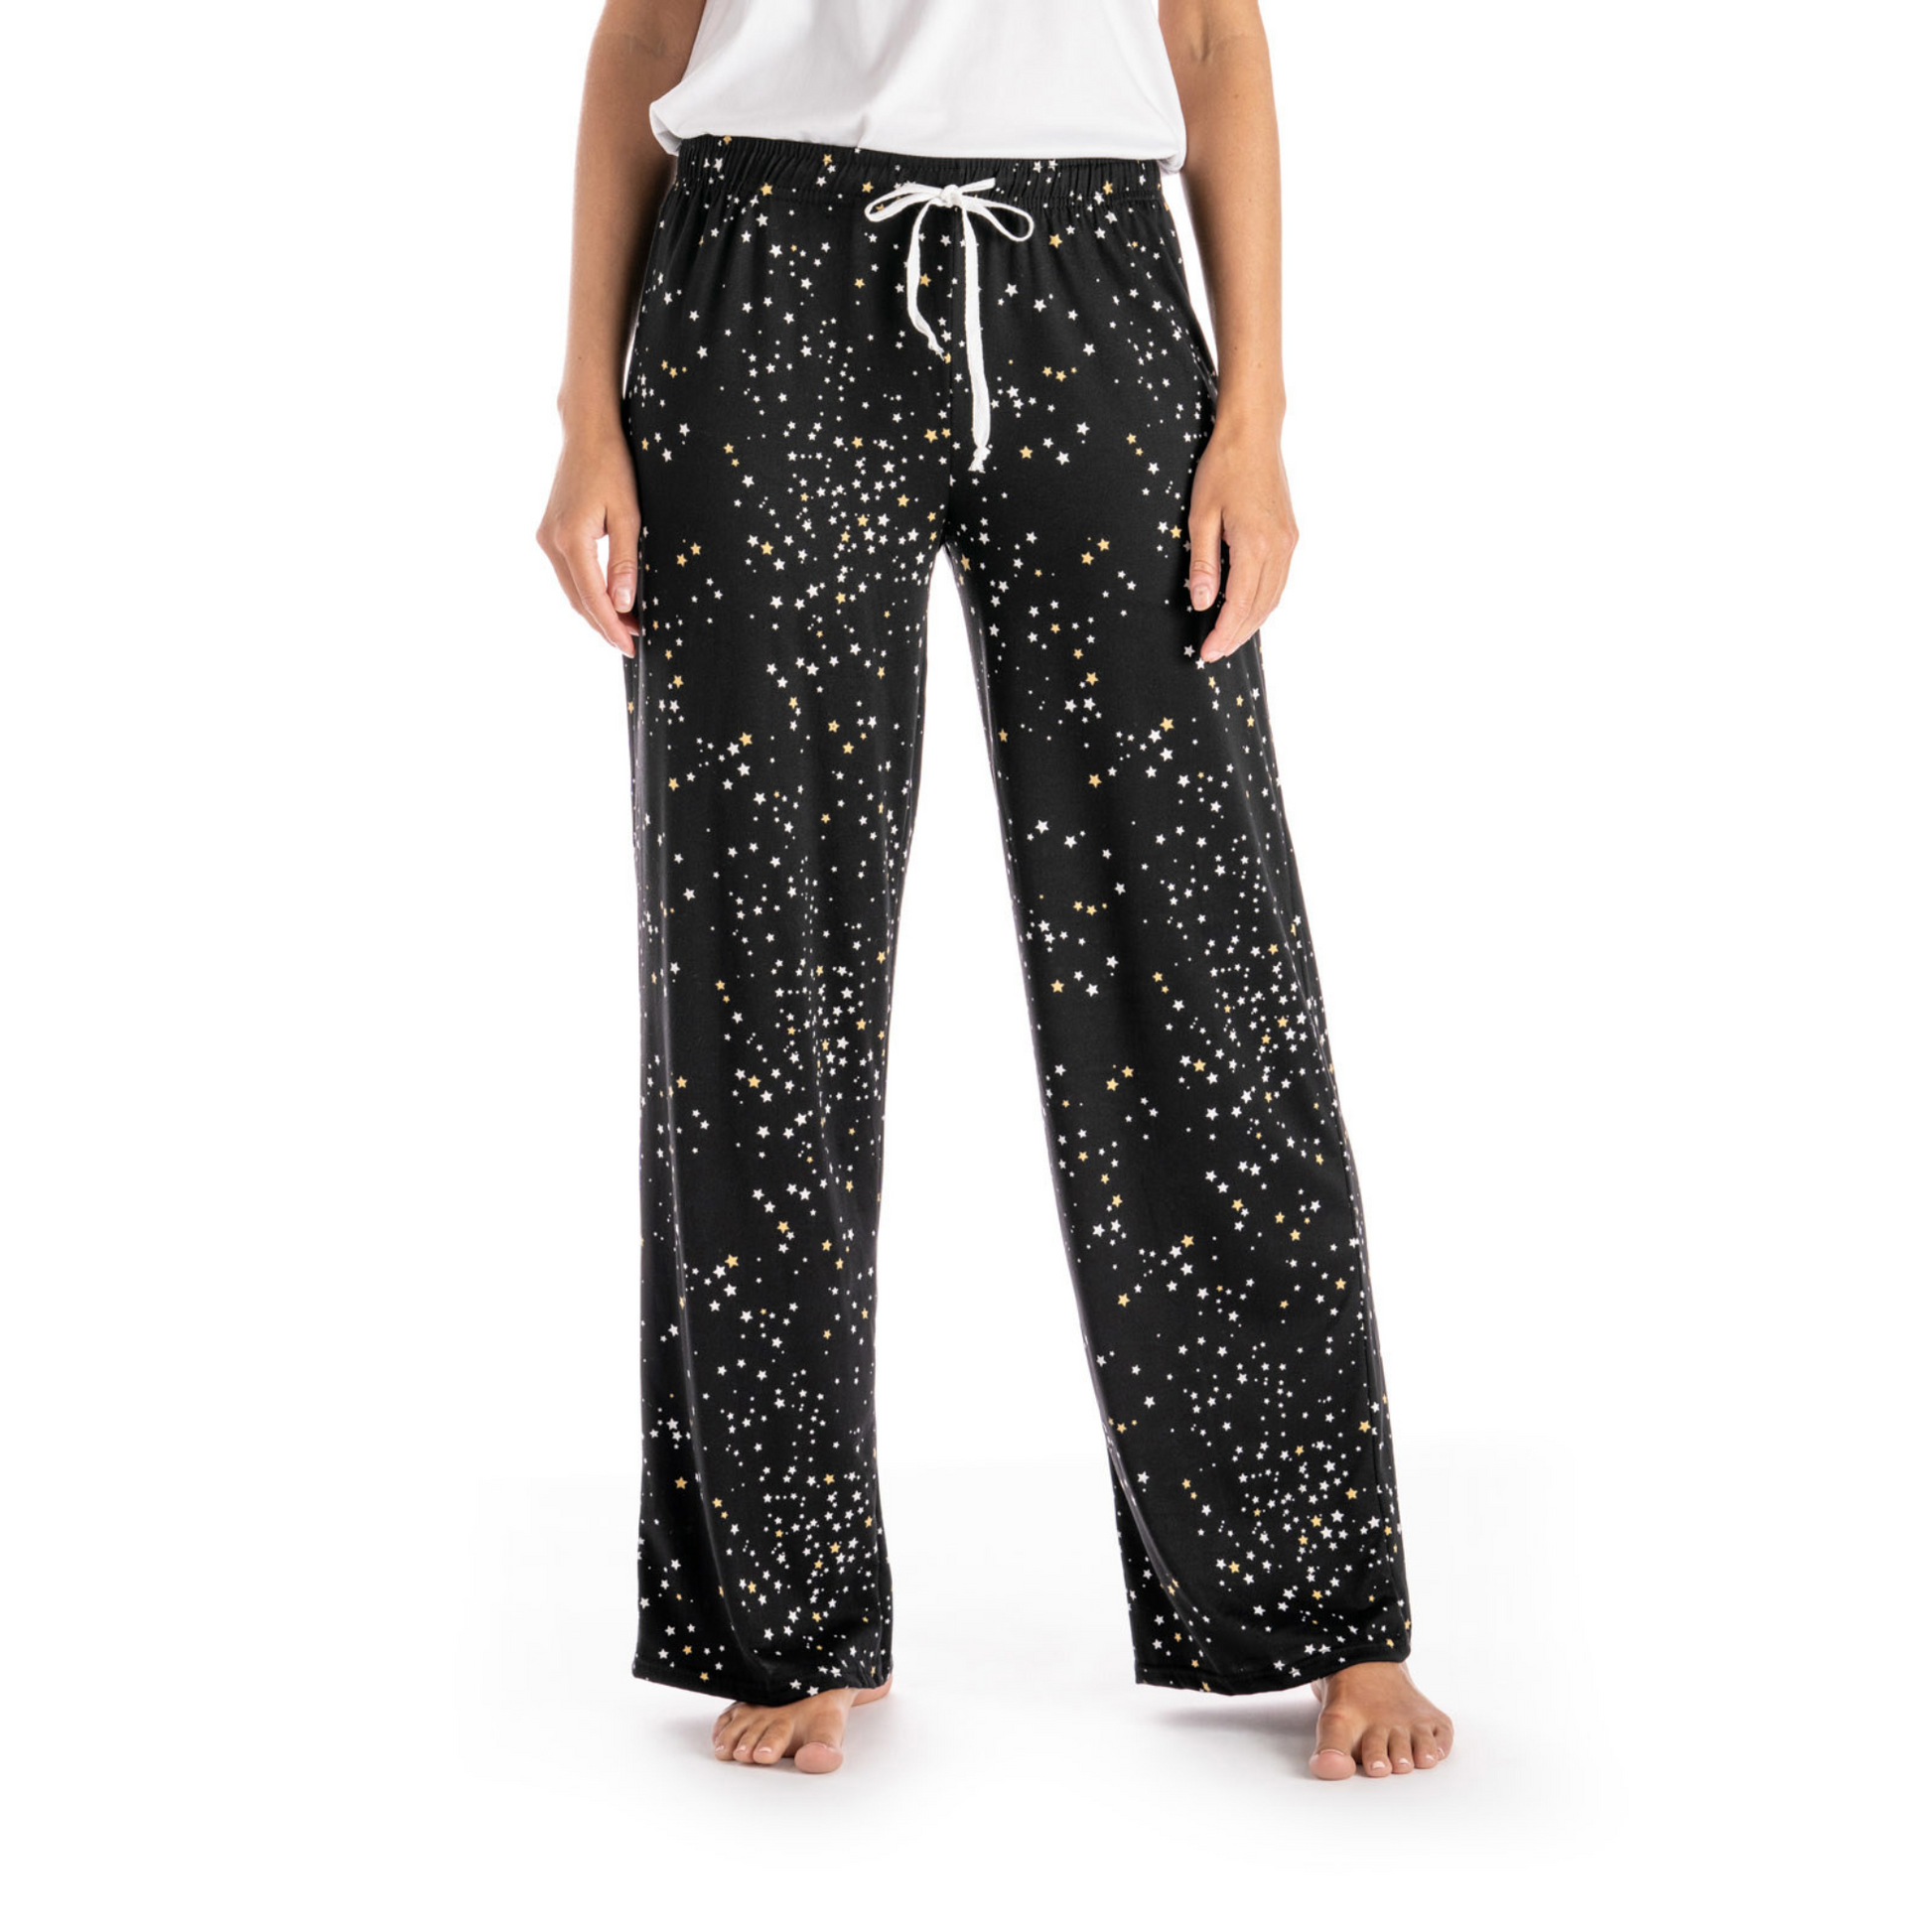 super soft black star pattern loungewear pants with drawstring